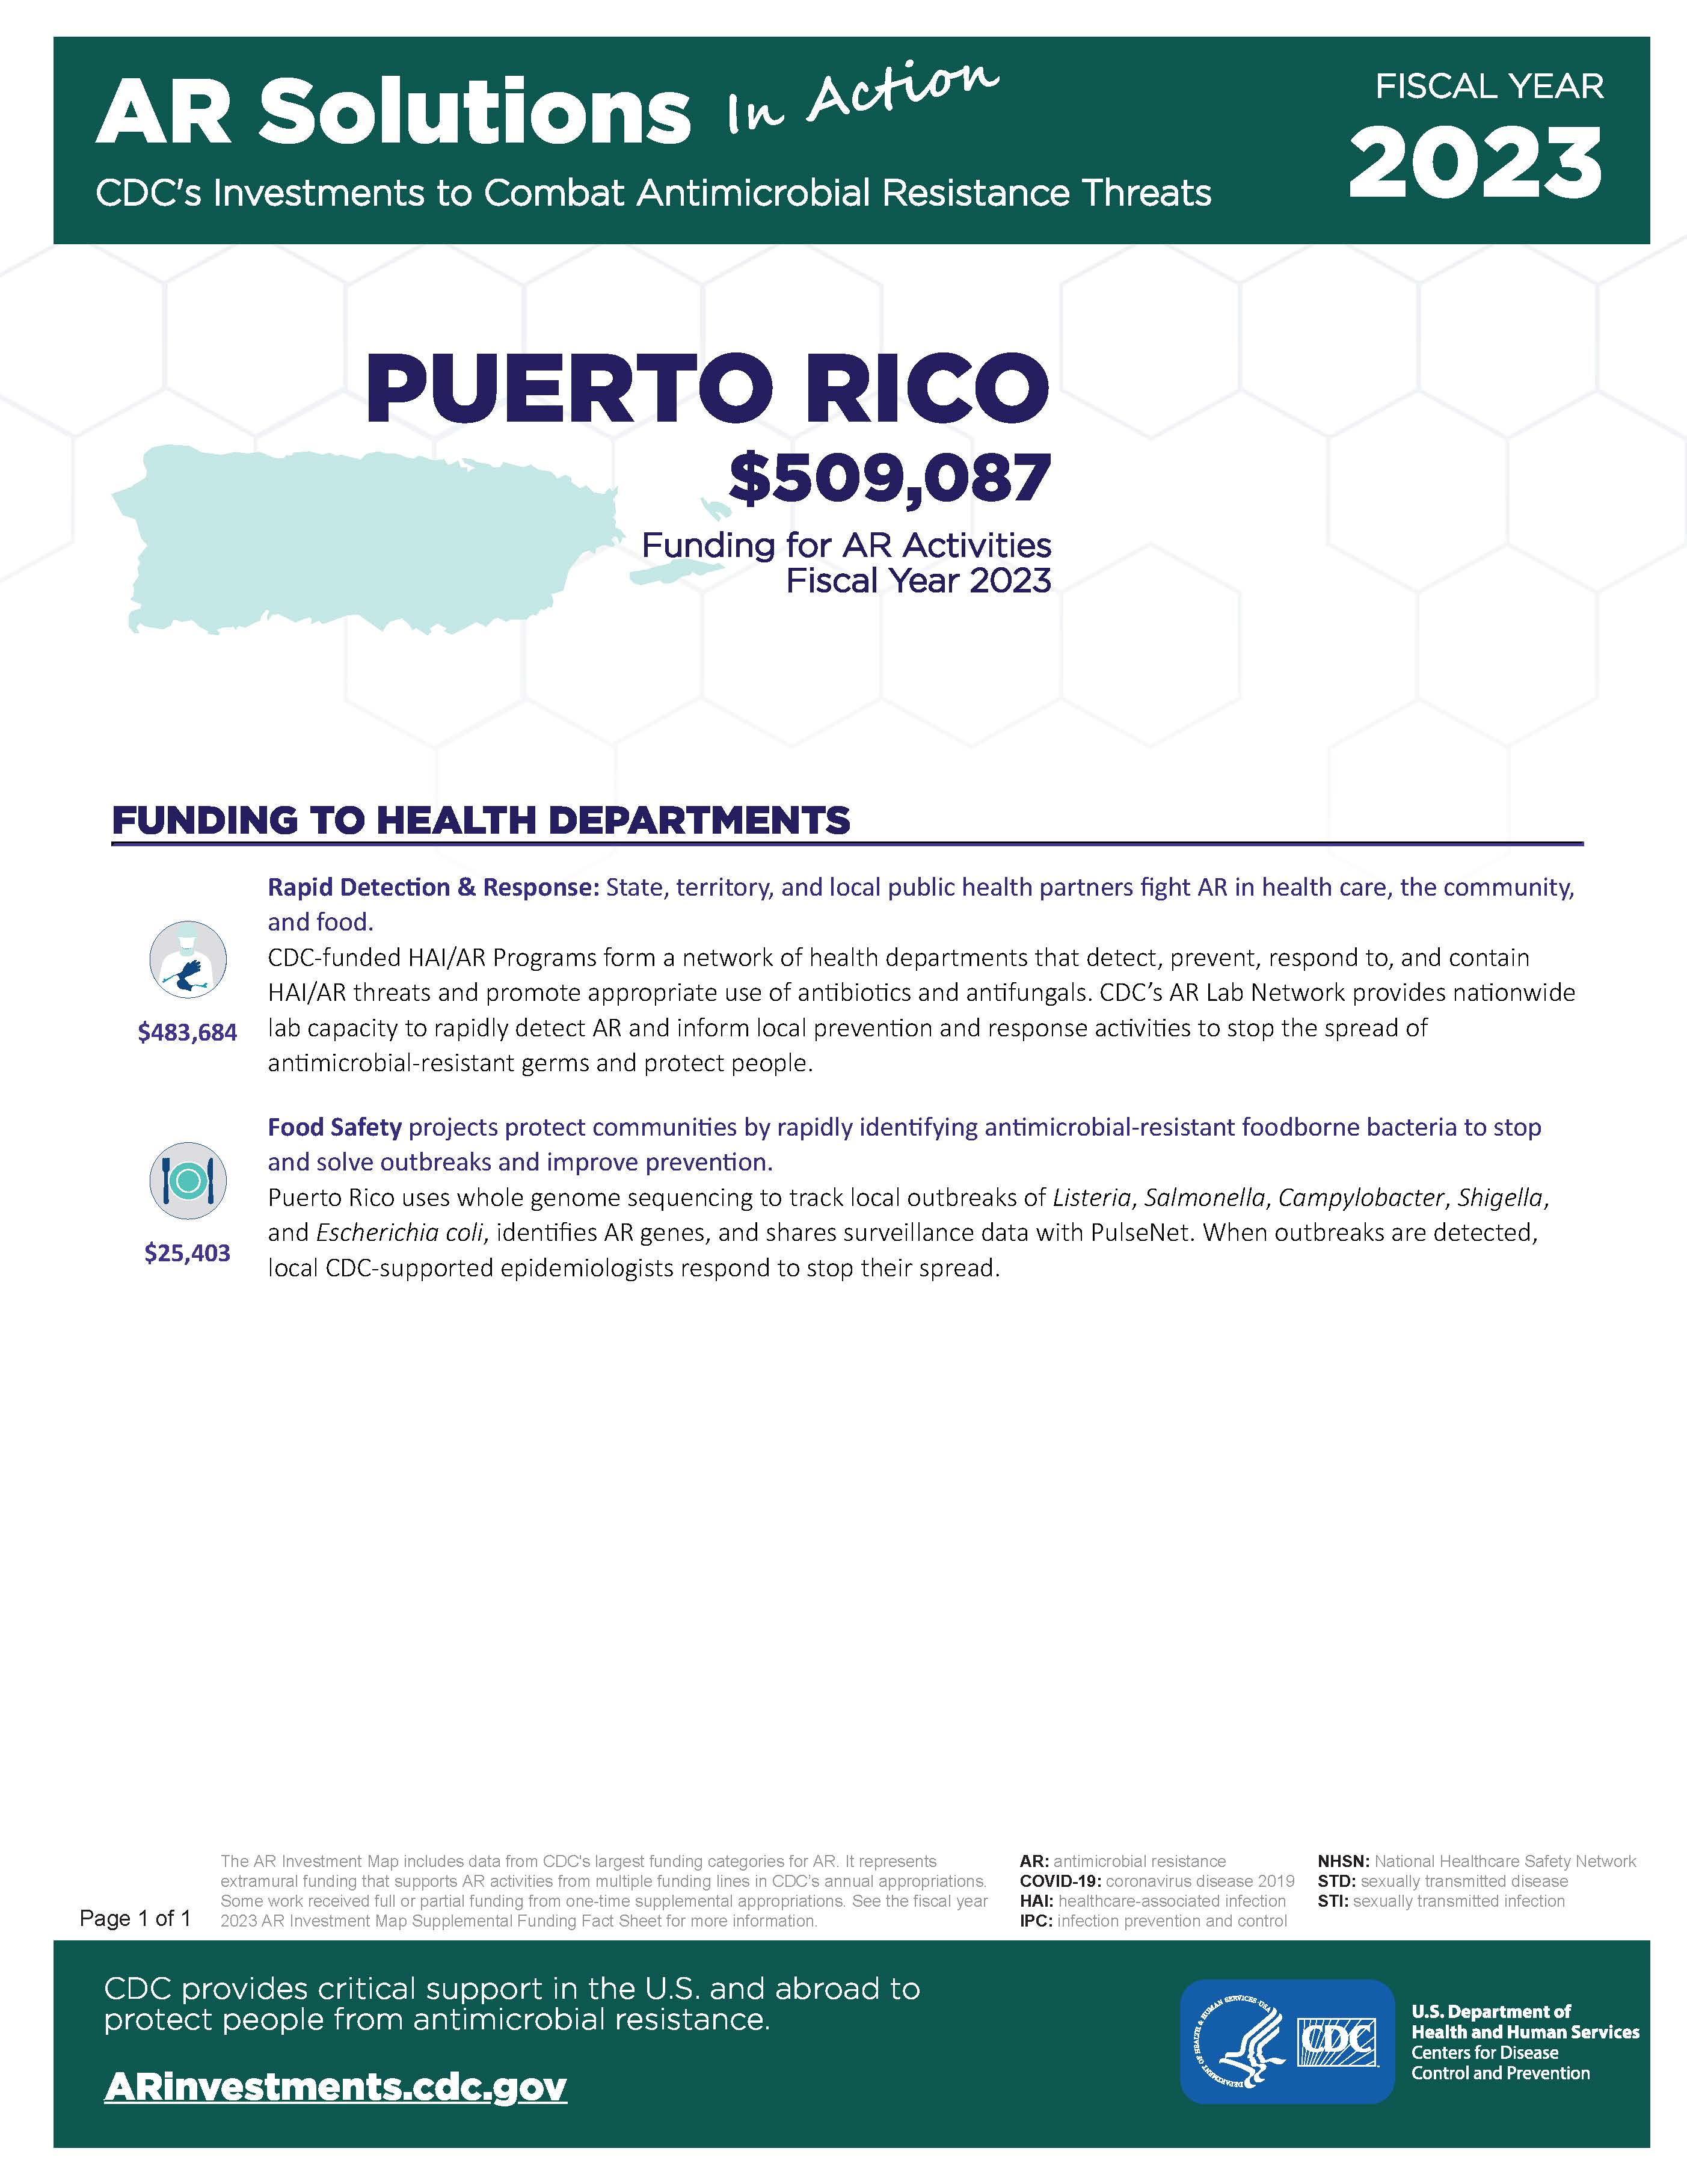 View Factsheet for Puerto Rico